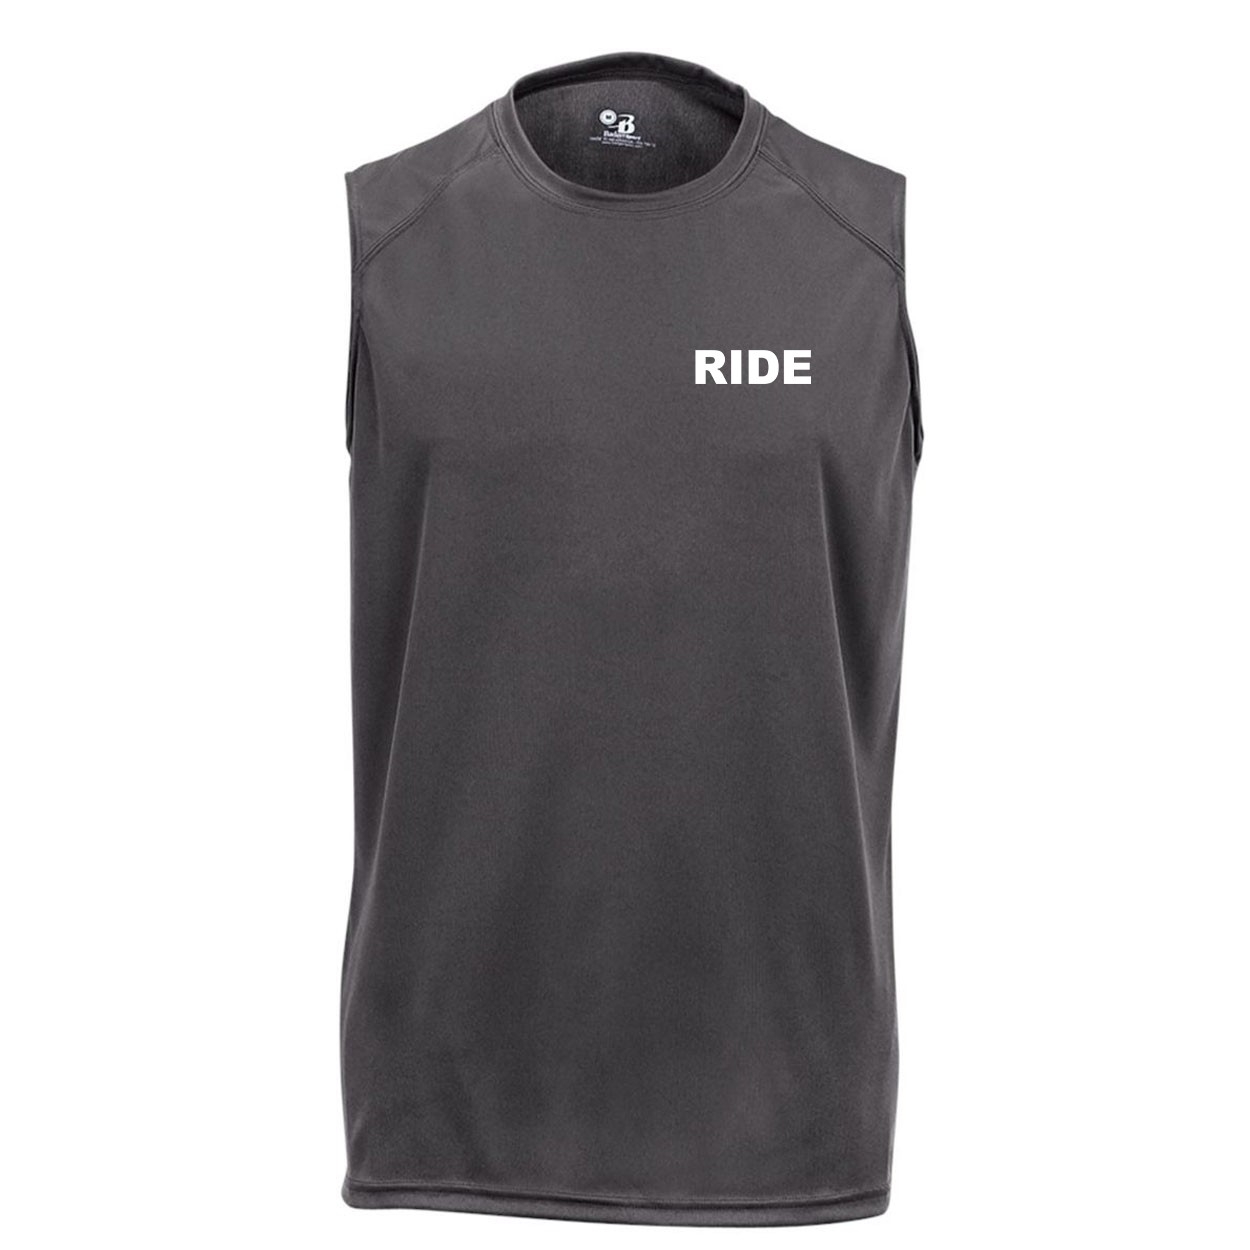 Ride Brand Logo Night Out Unisex Performance Sleeveless T-Shirt Graphite Gray (White Logo)